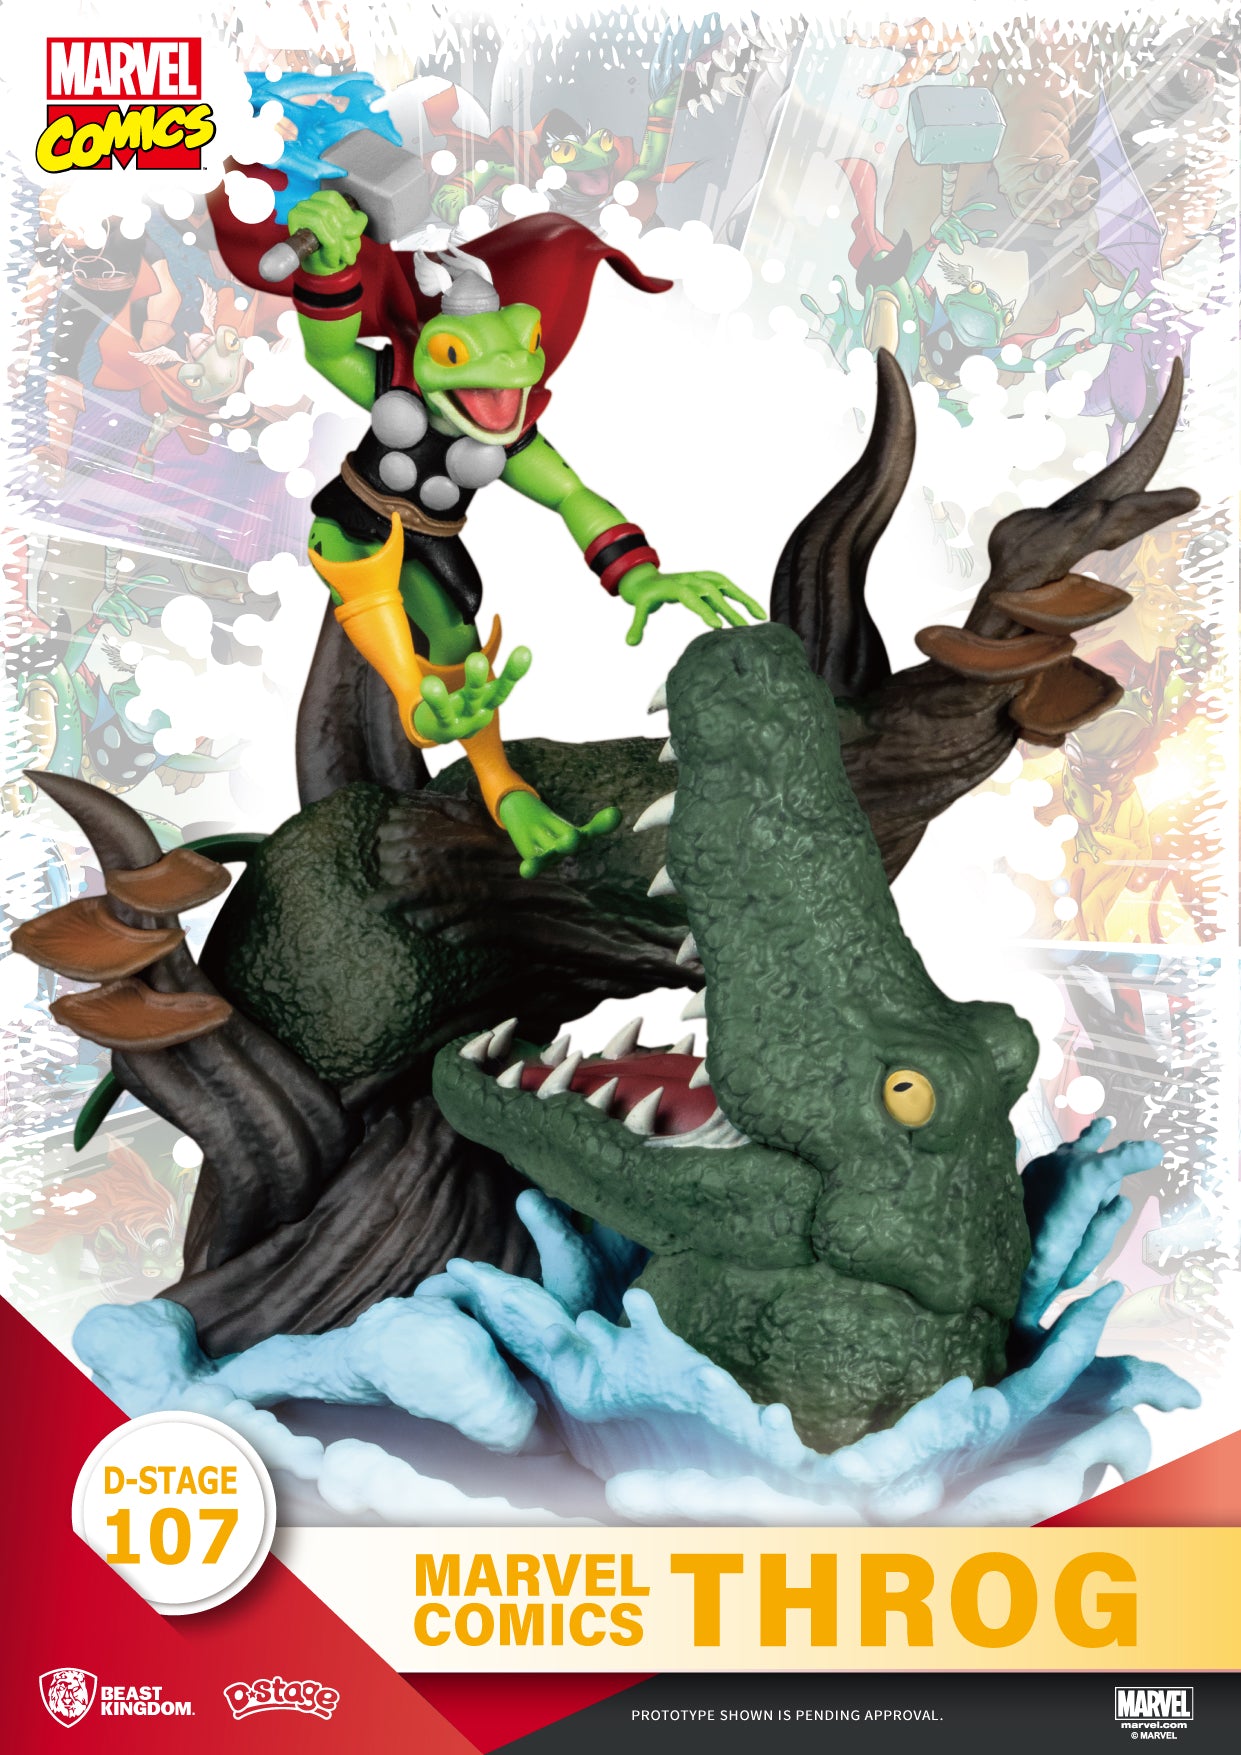 Beast Kingdom DS-107 Marvel Comics: Throg Diorama Stage D-Stage Figure Statue